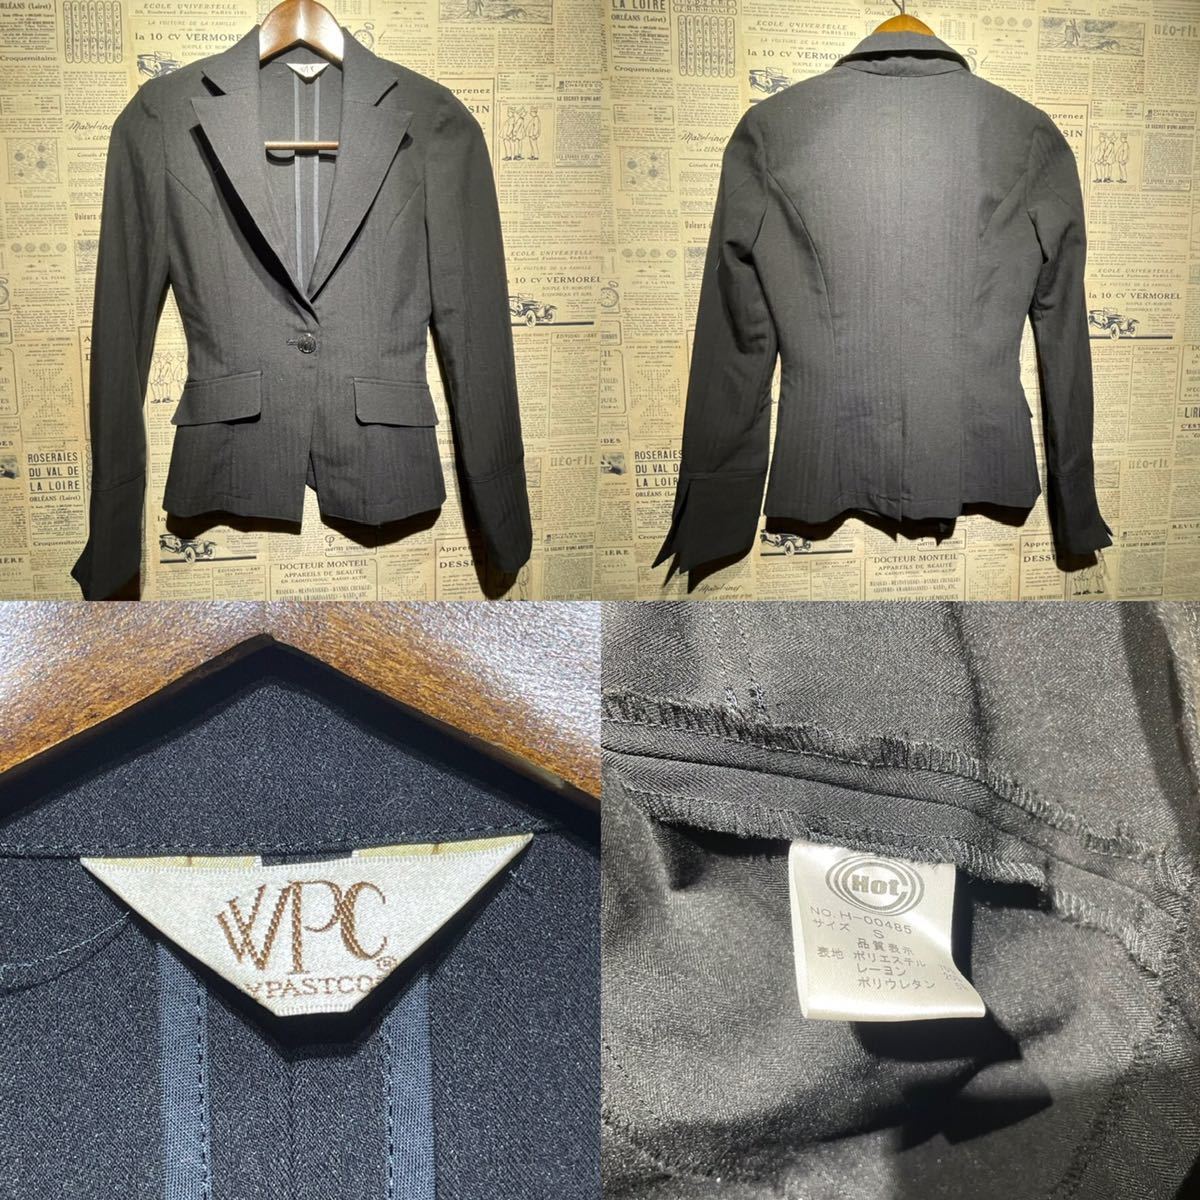 WPC WAYPASTCOOL スーツ セットアップ ジャケット&スカート size S